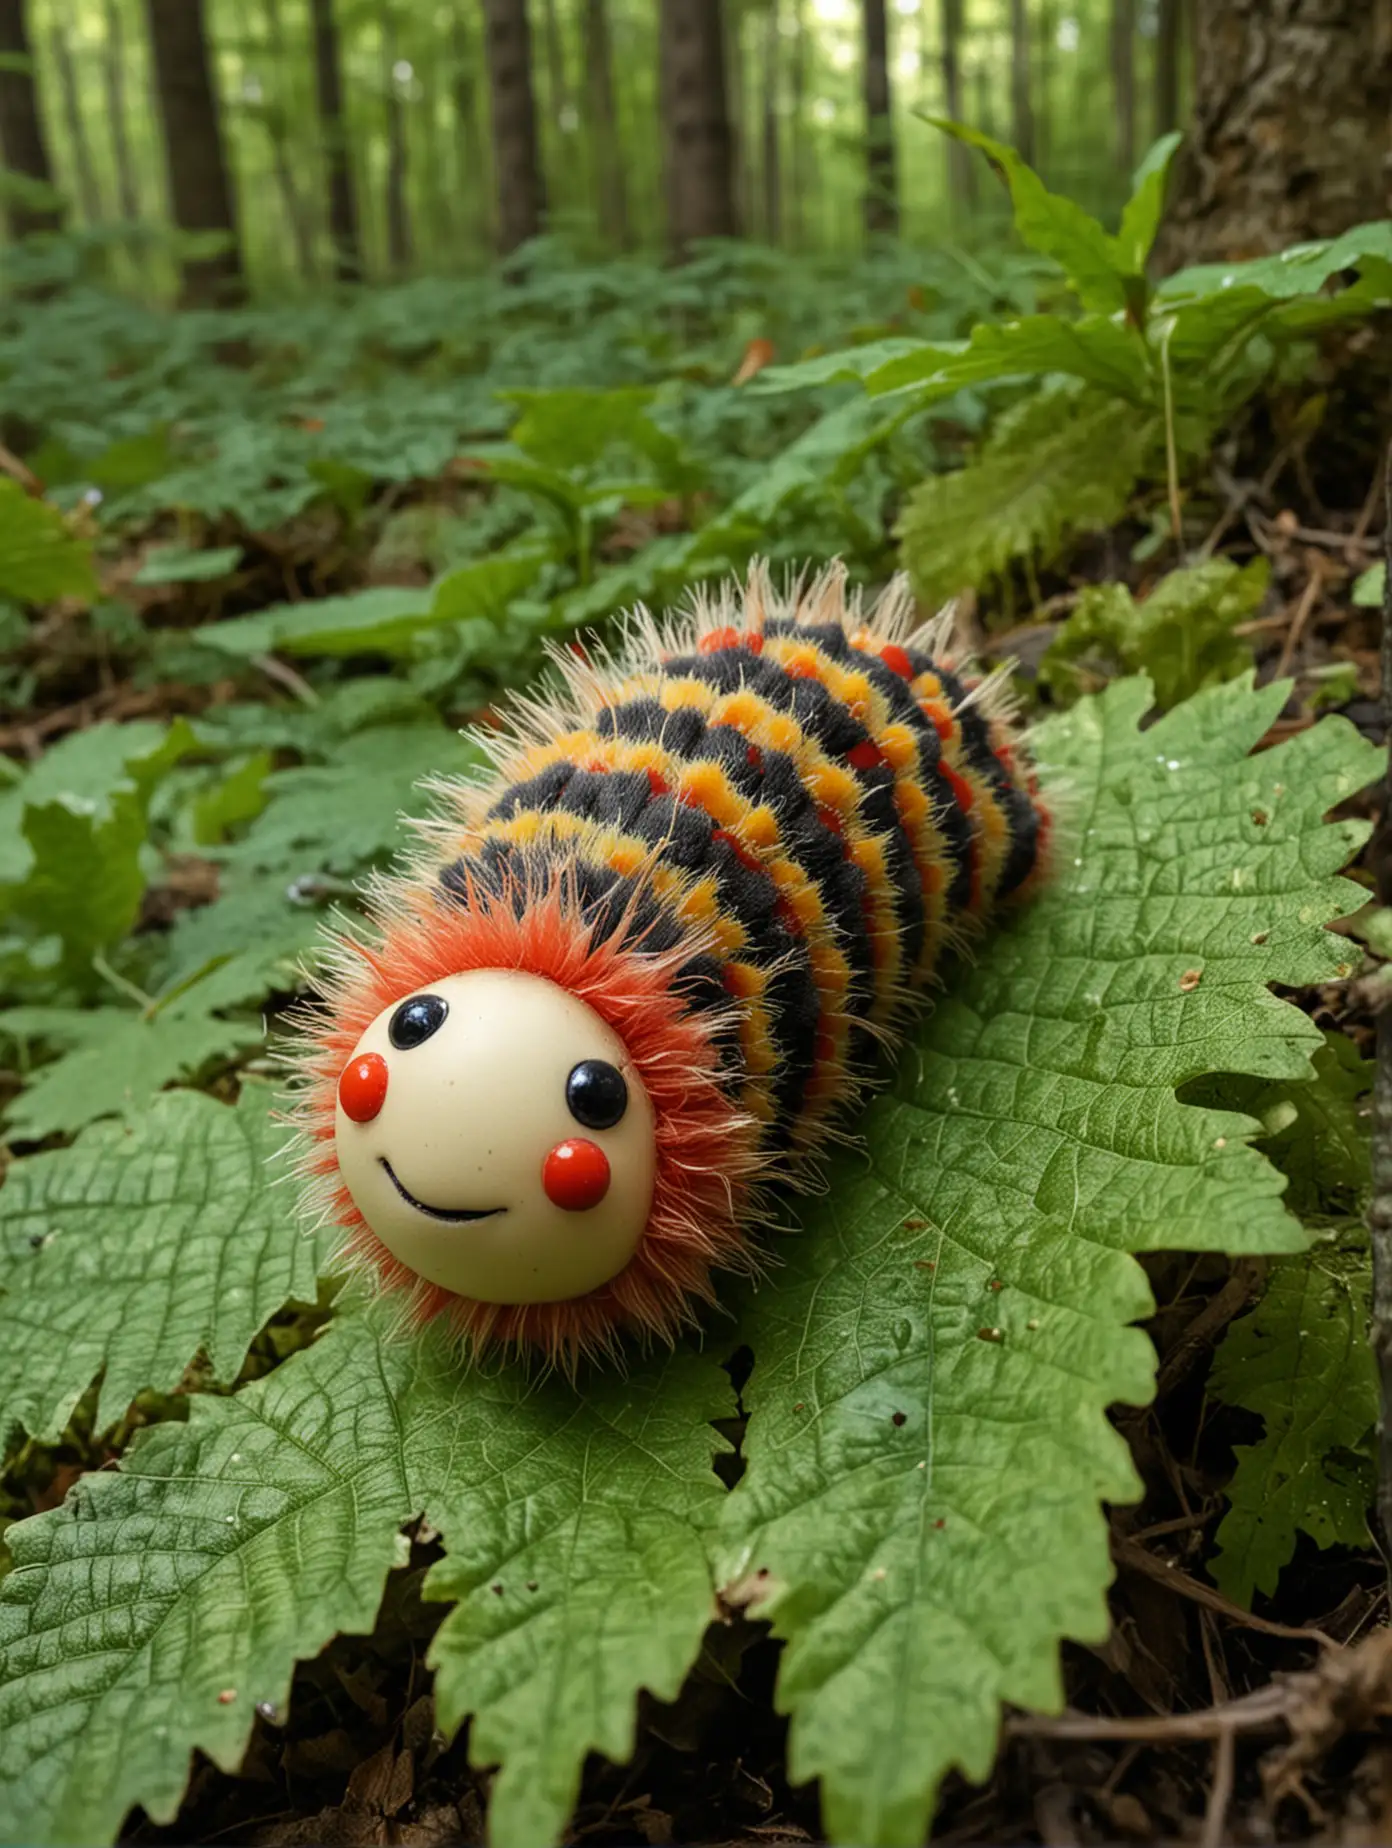 Adorable Fat Clown Caterpillar Hiding Beneath Forest Foliage